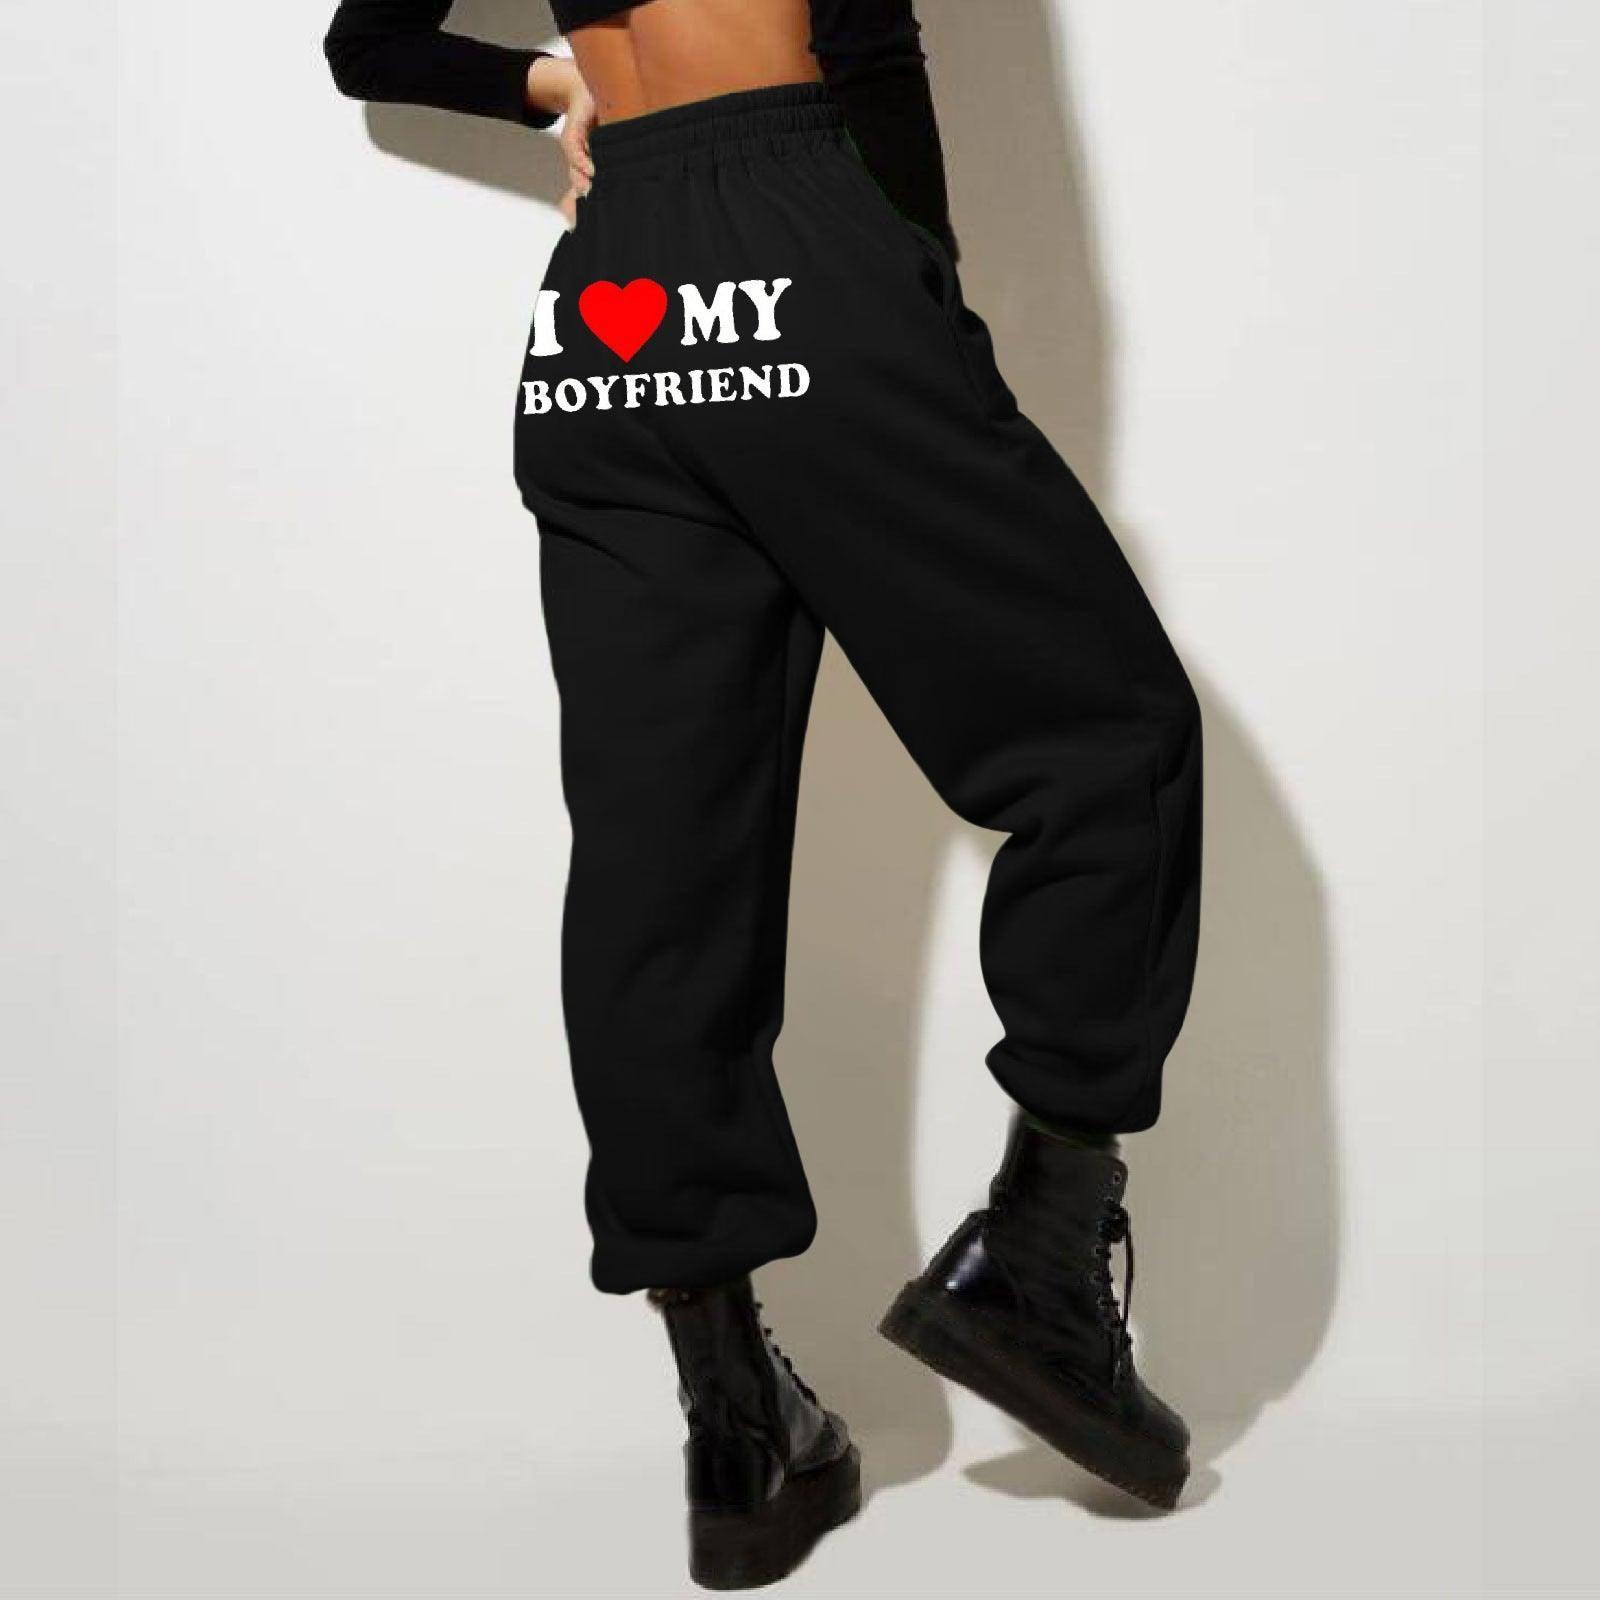 I Love MY BOYFRIEND Printed Trousers Casual Sweatpants Men-Black Back Picture-5